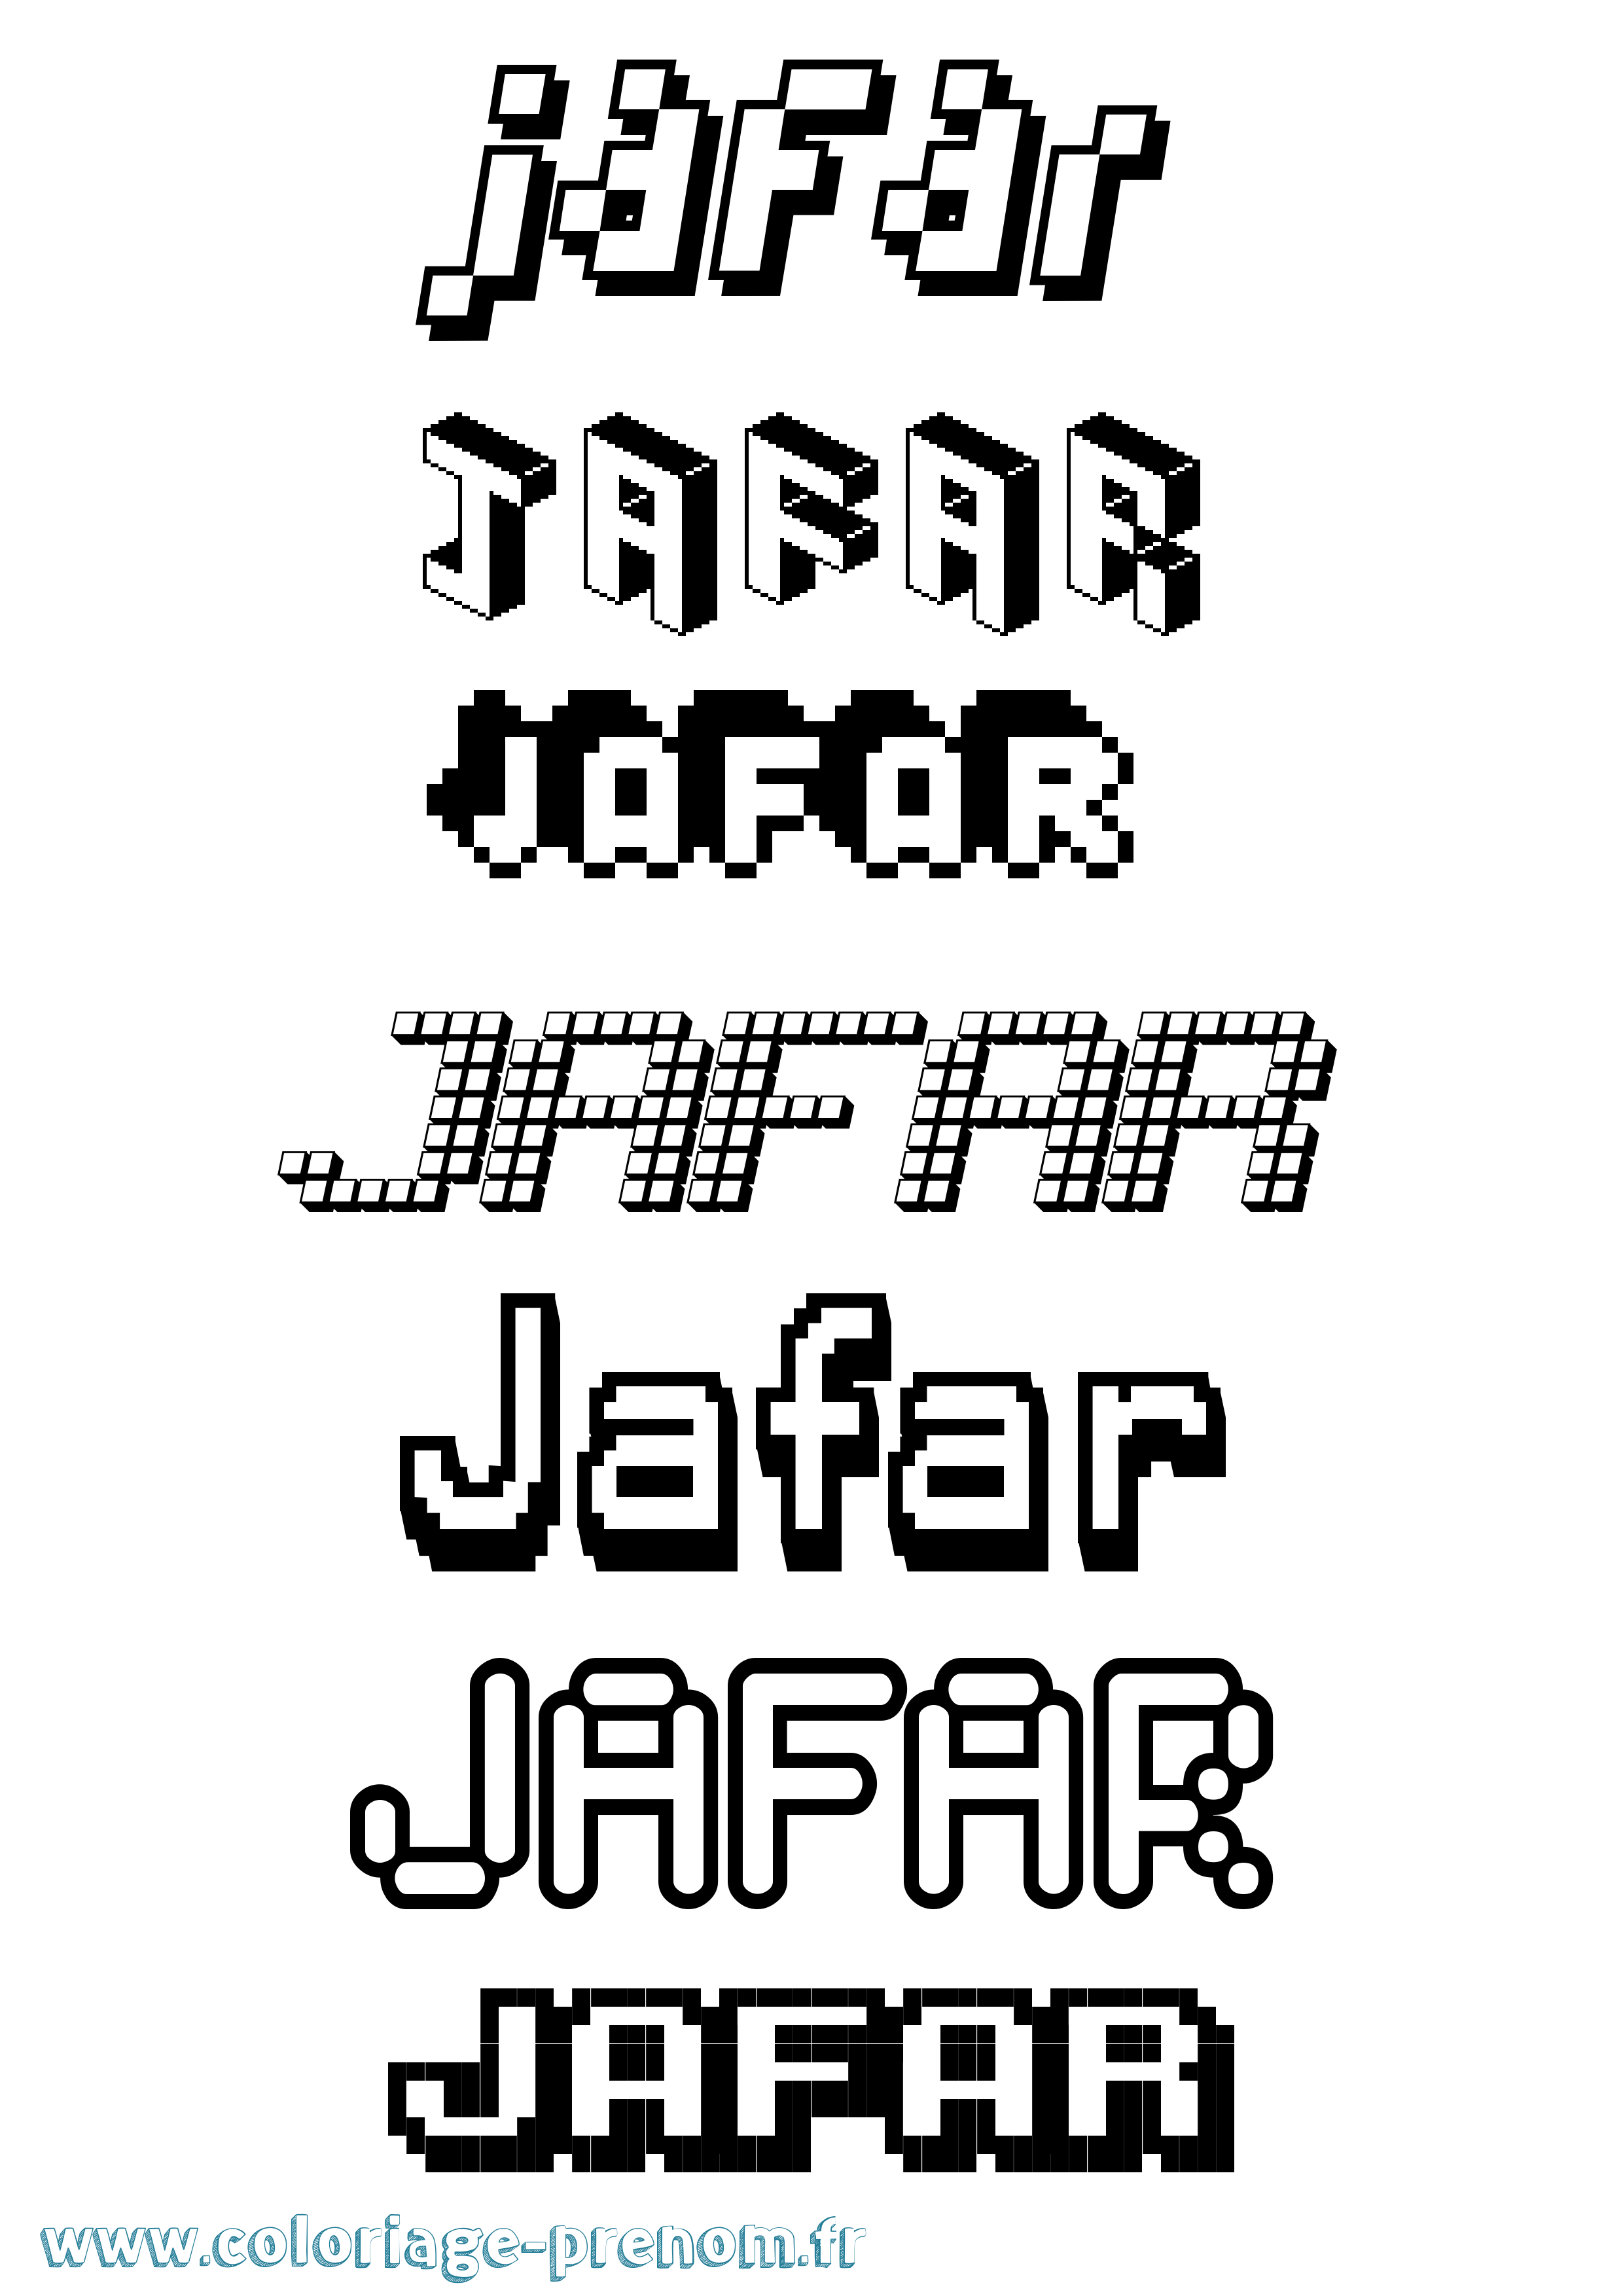 Coloriage prénom Jafar Pixel